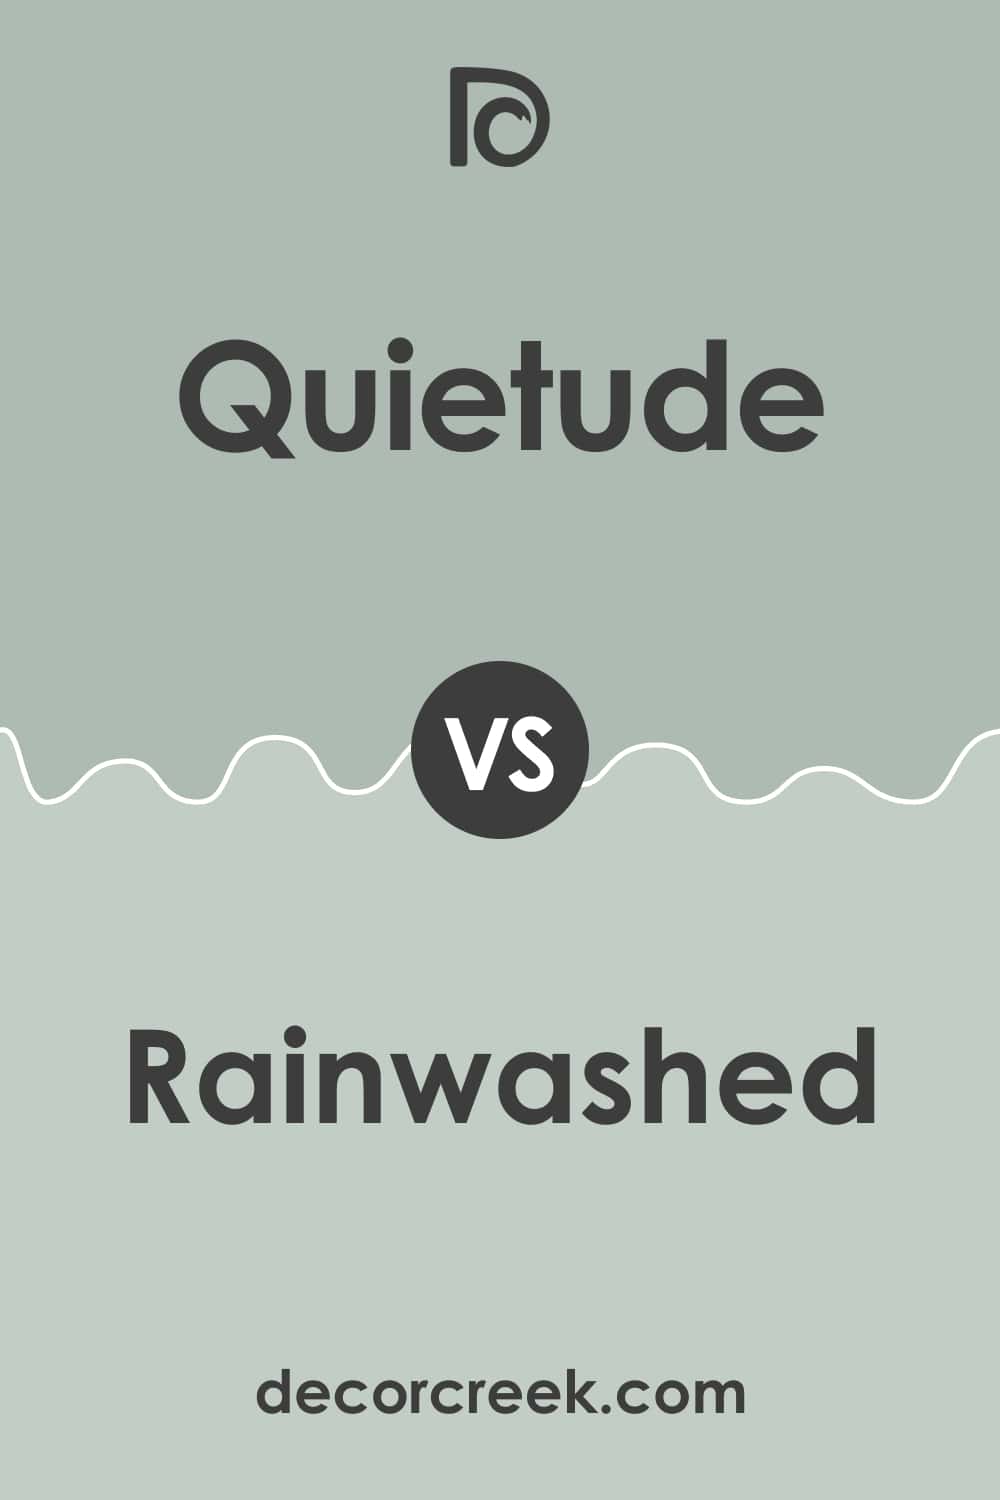 Quietude vs Rainwashed